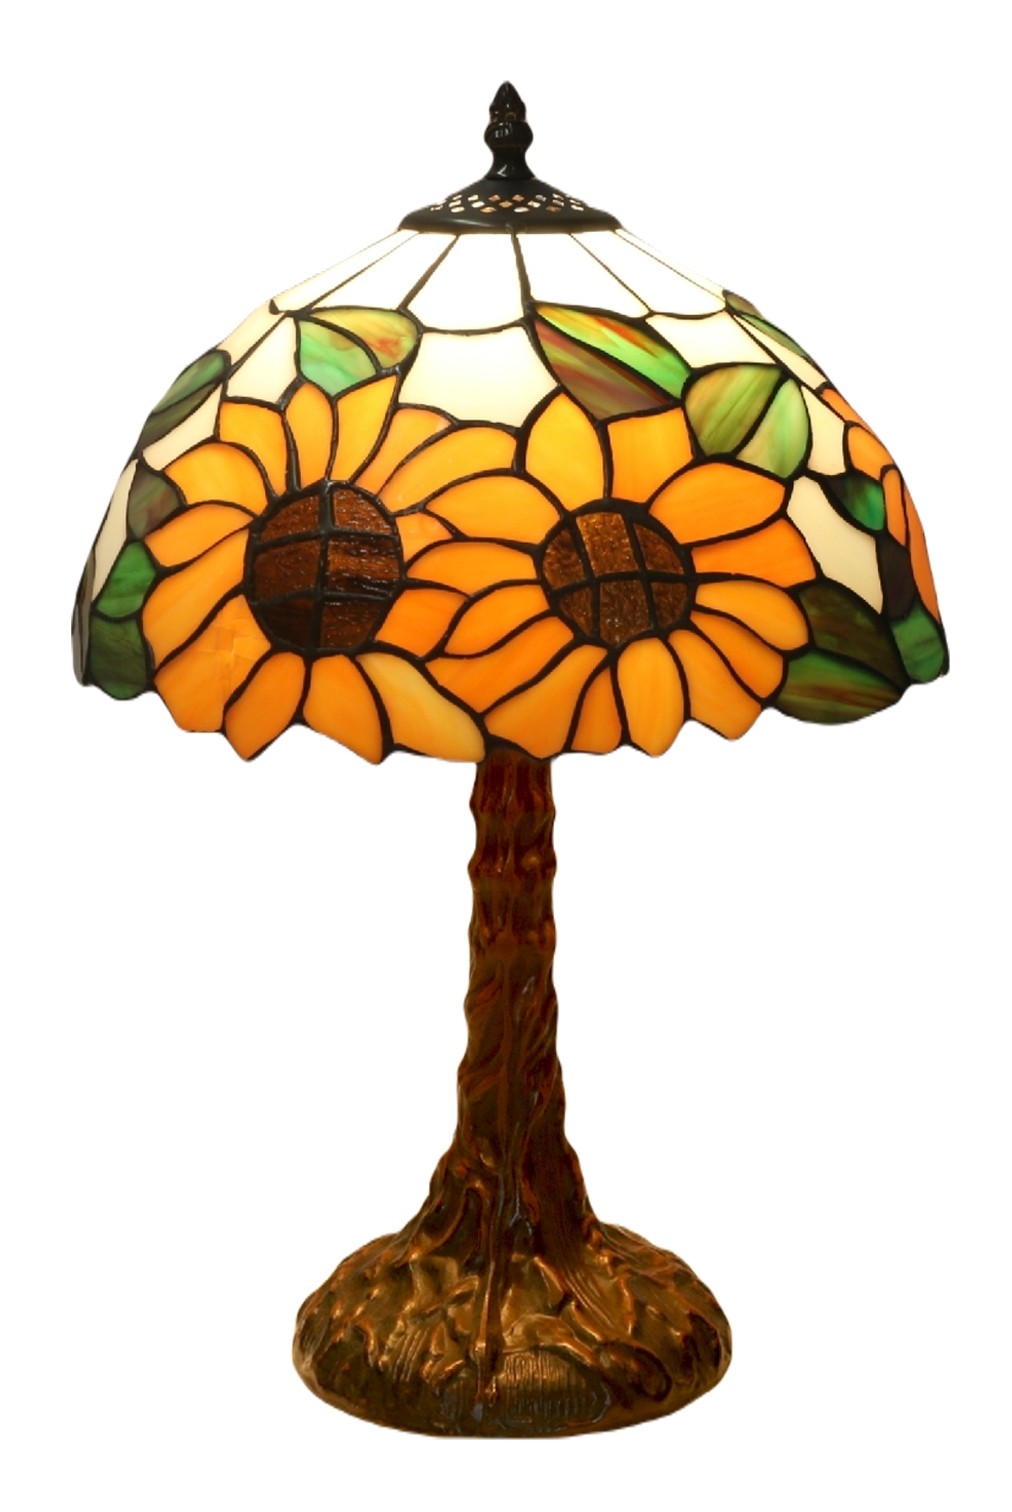 Sunflower Lamp (Medium) 46cm With 30cm Shade Dia. + Free Bulb